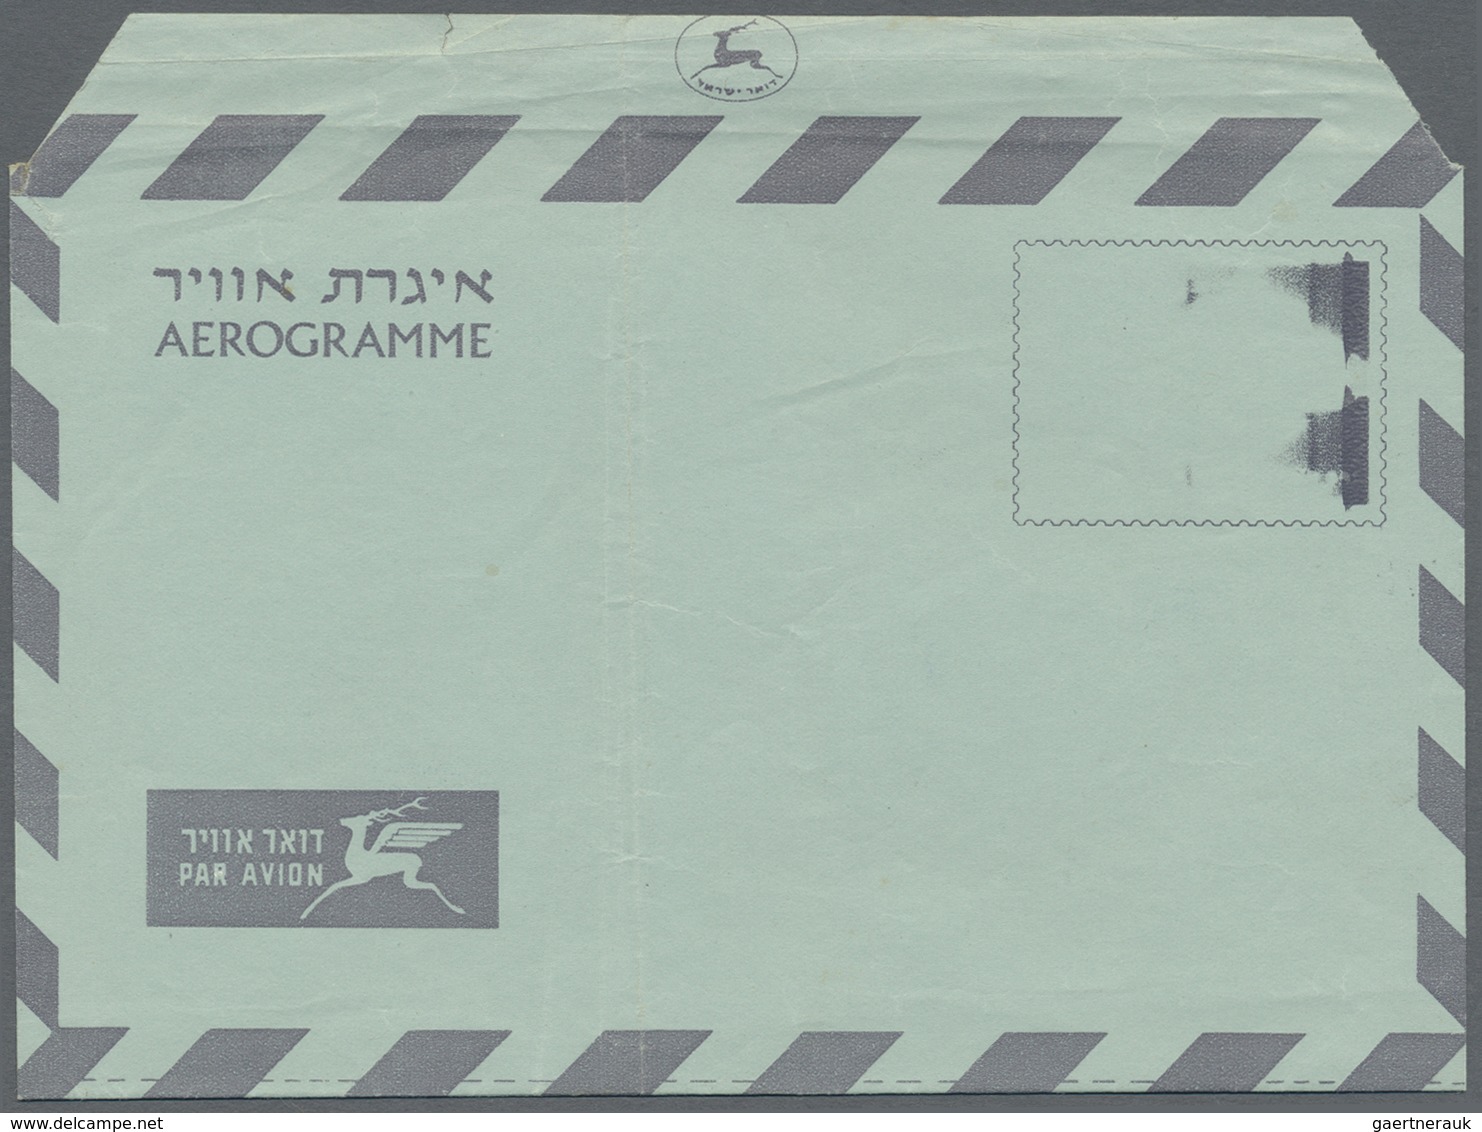 GA Israel: 1952/1960 (ca.), AEROGRAMMES: interesting group with 18 aerogrammes (unused except one is CT